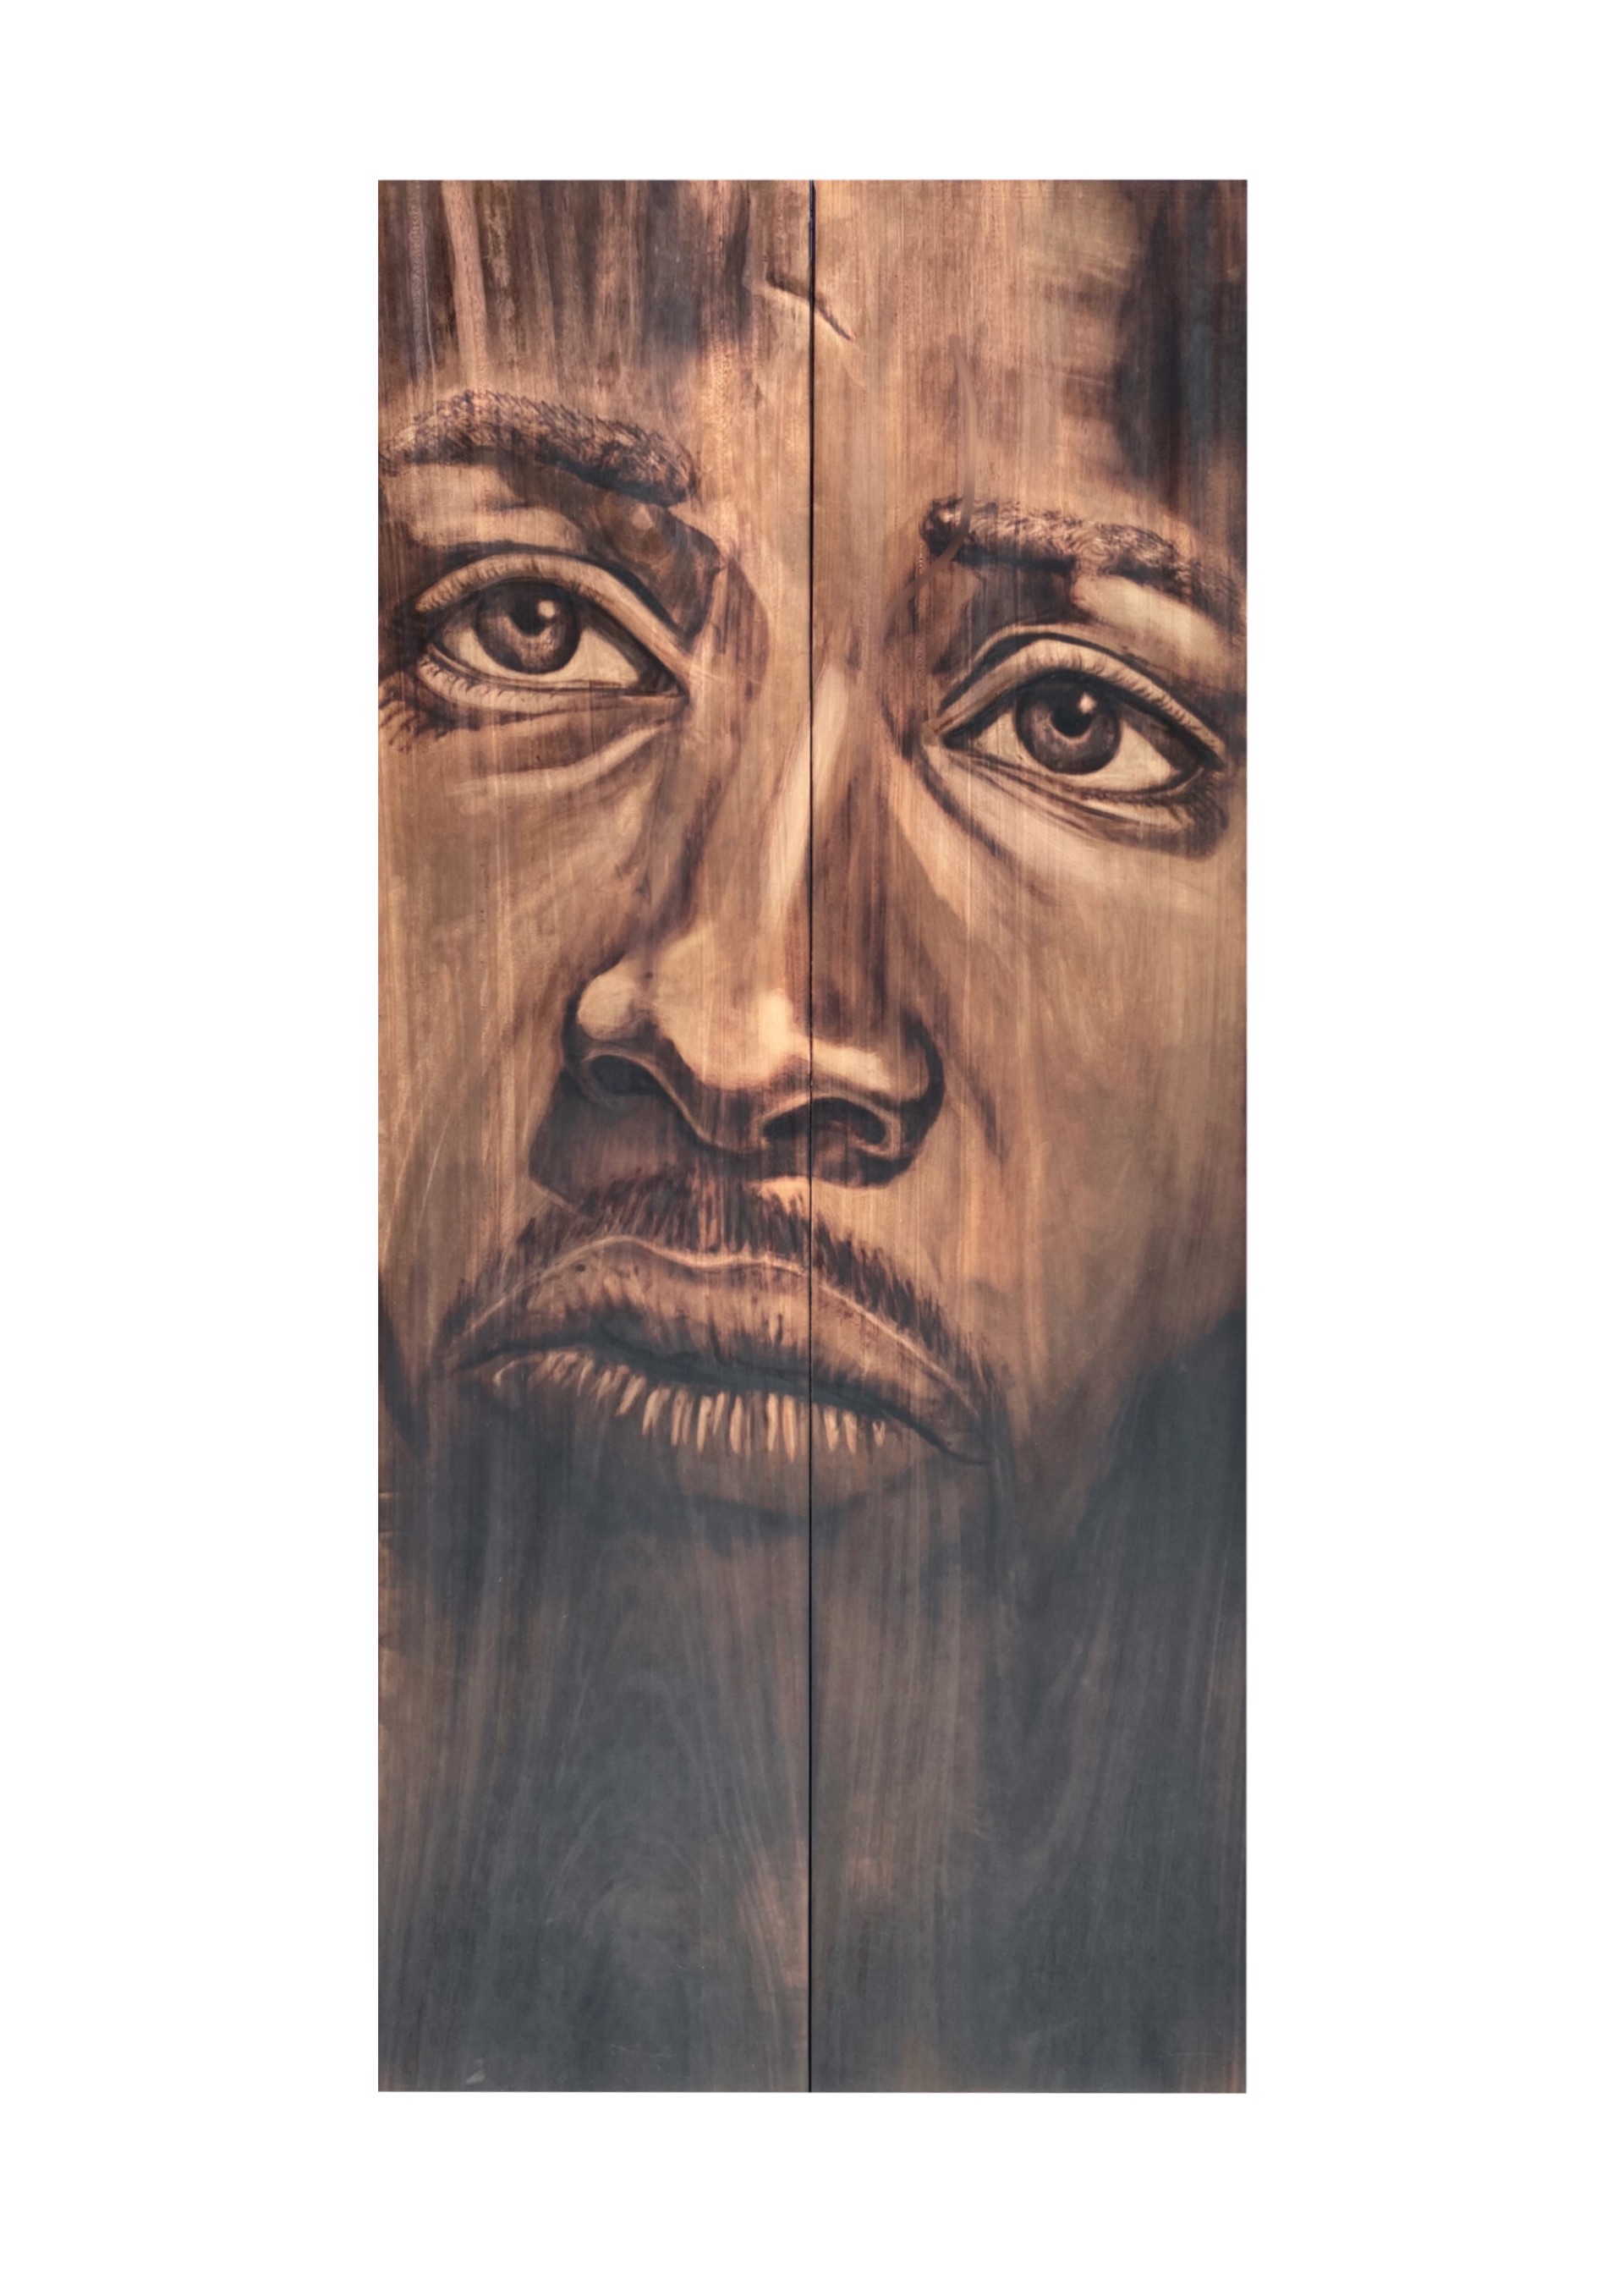 Wood Panel 4 by Zachary Aronson